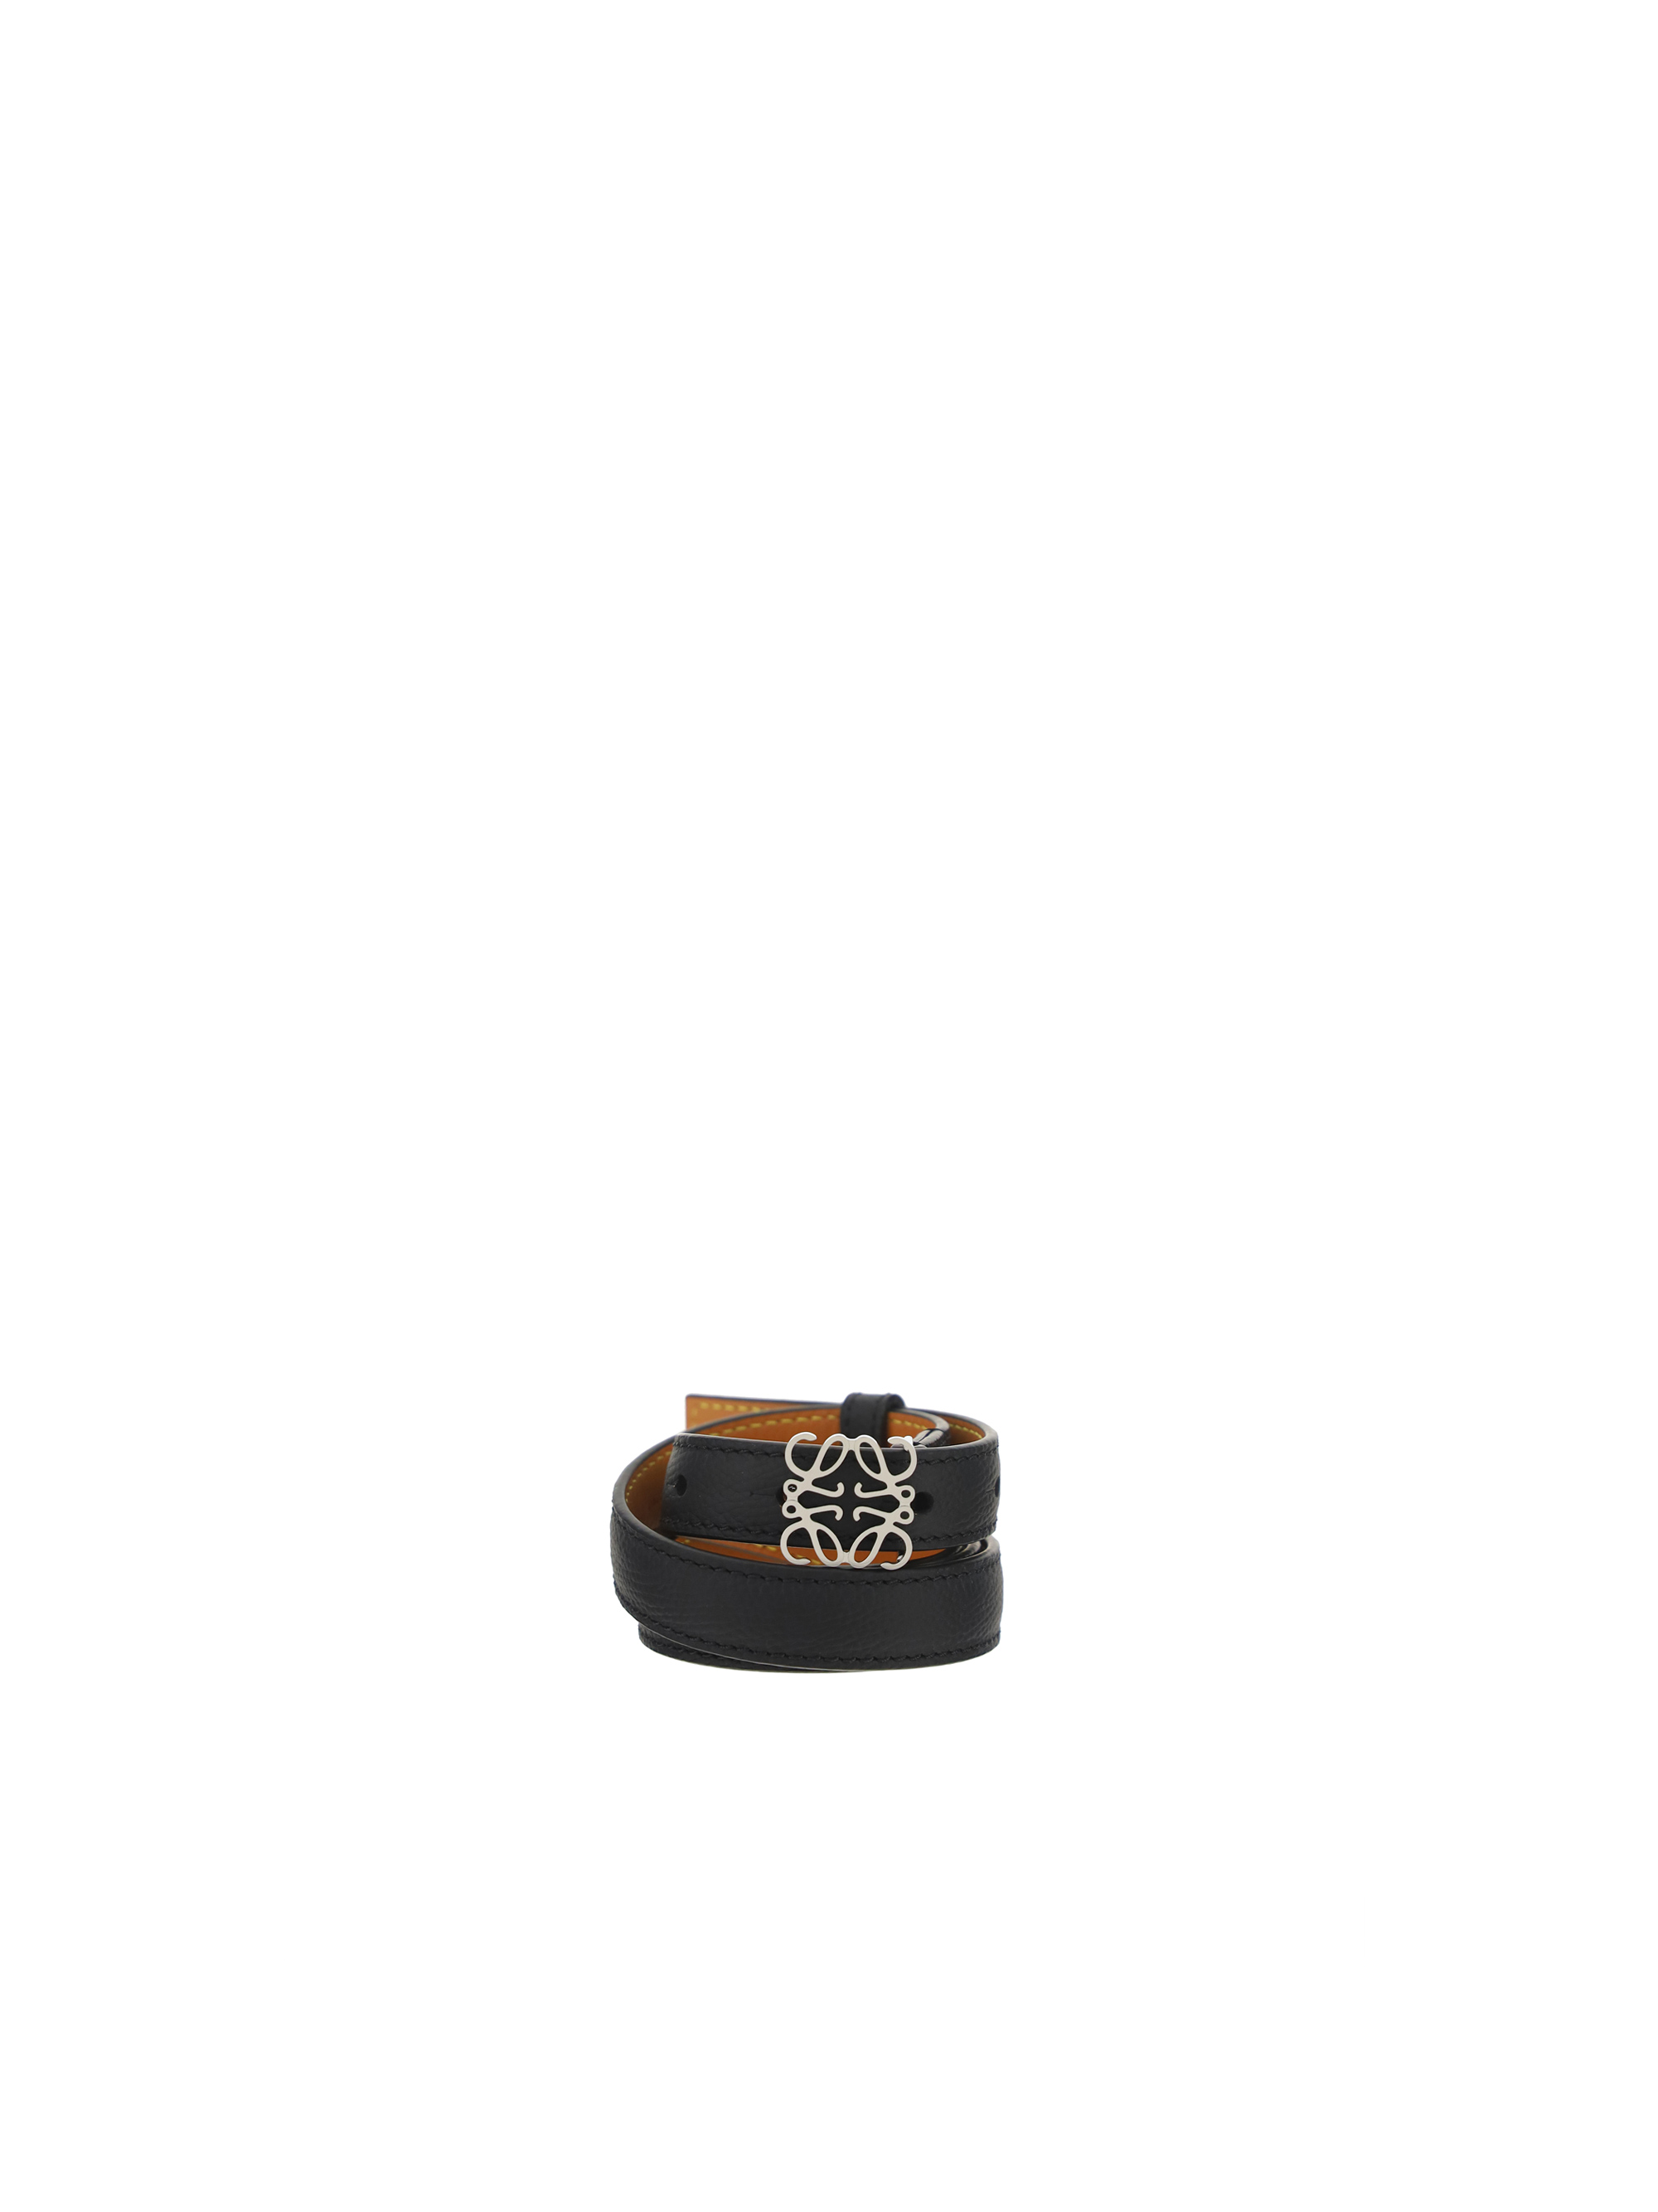 Loewe Reversible Anagram Belt In Black/palladium